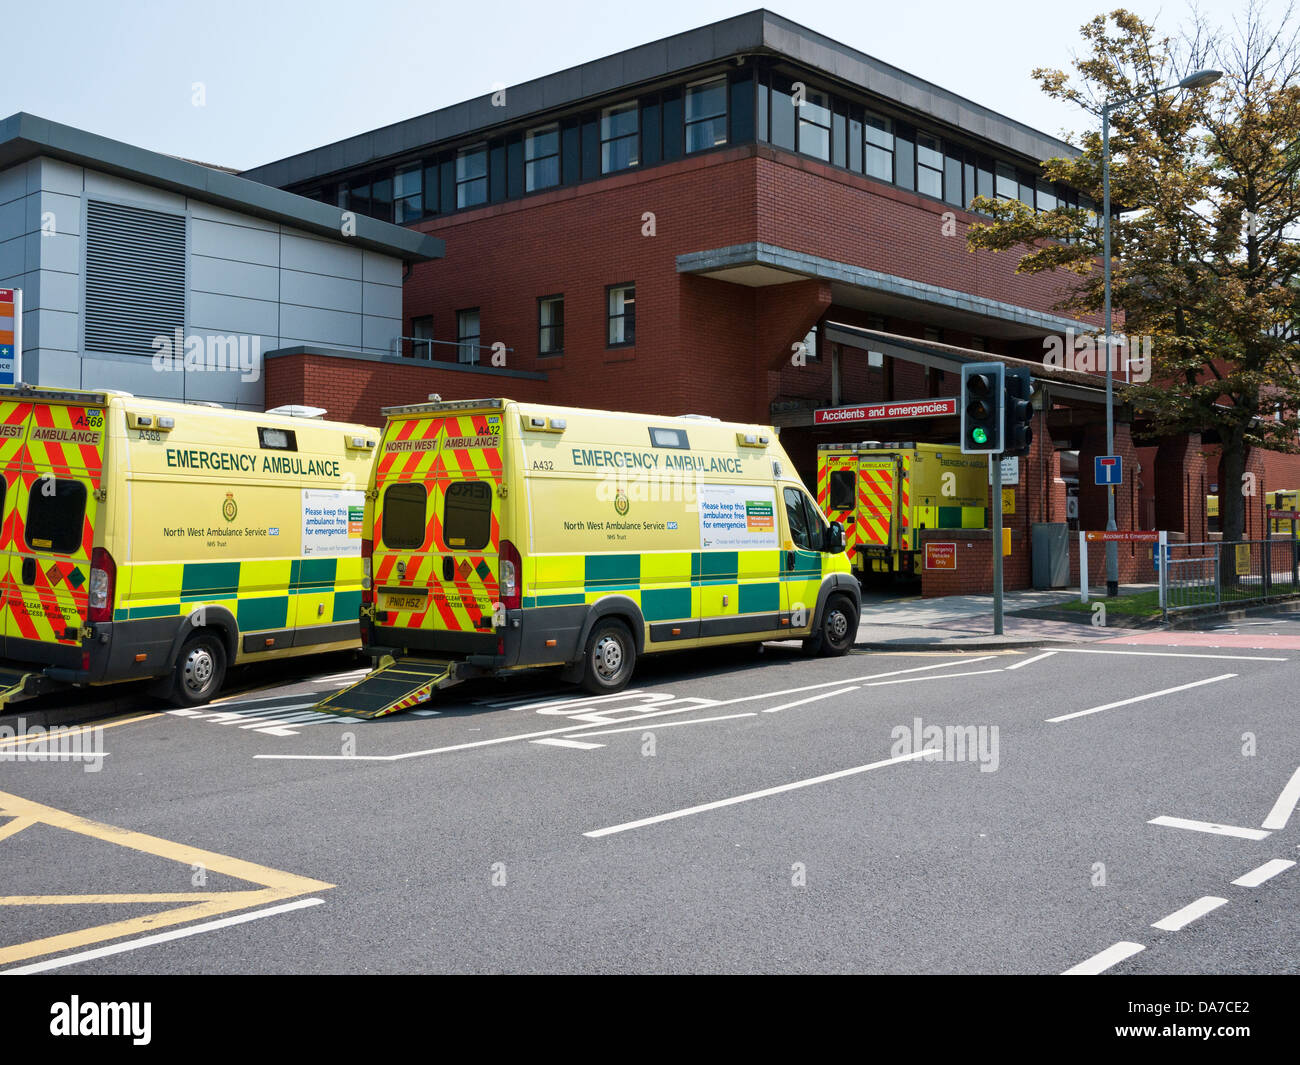 Accident and Emergency Tameside General Hospital, Ashton-under-lyne,Greater Manchester, UK. Stock Photo